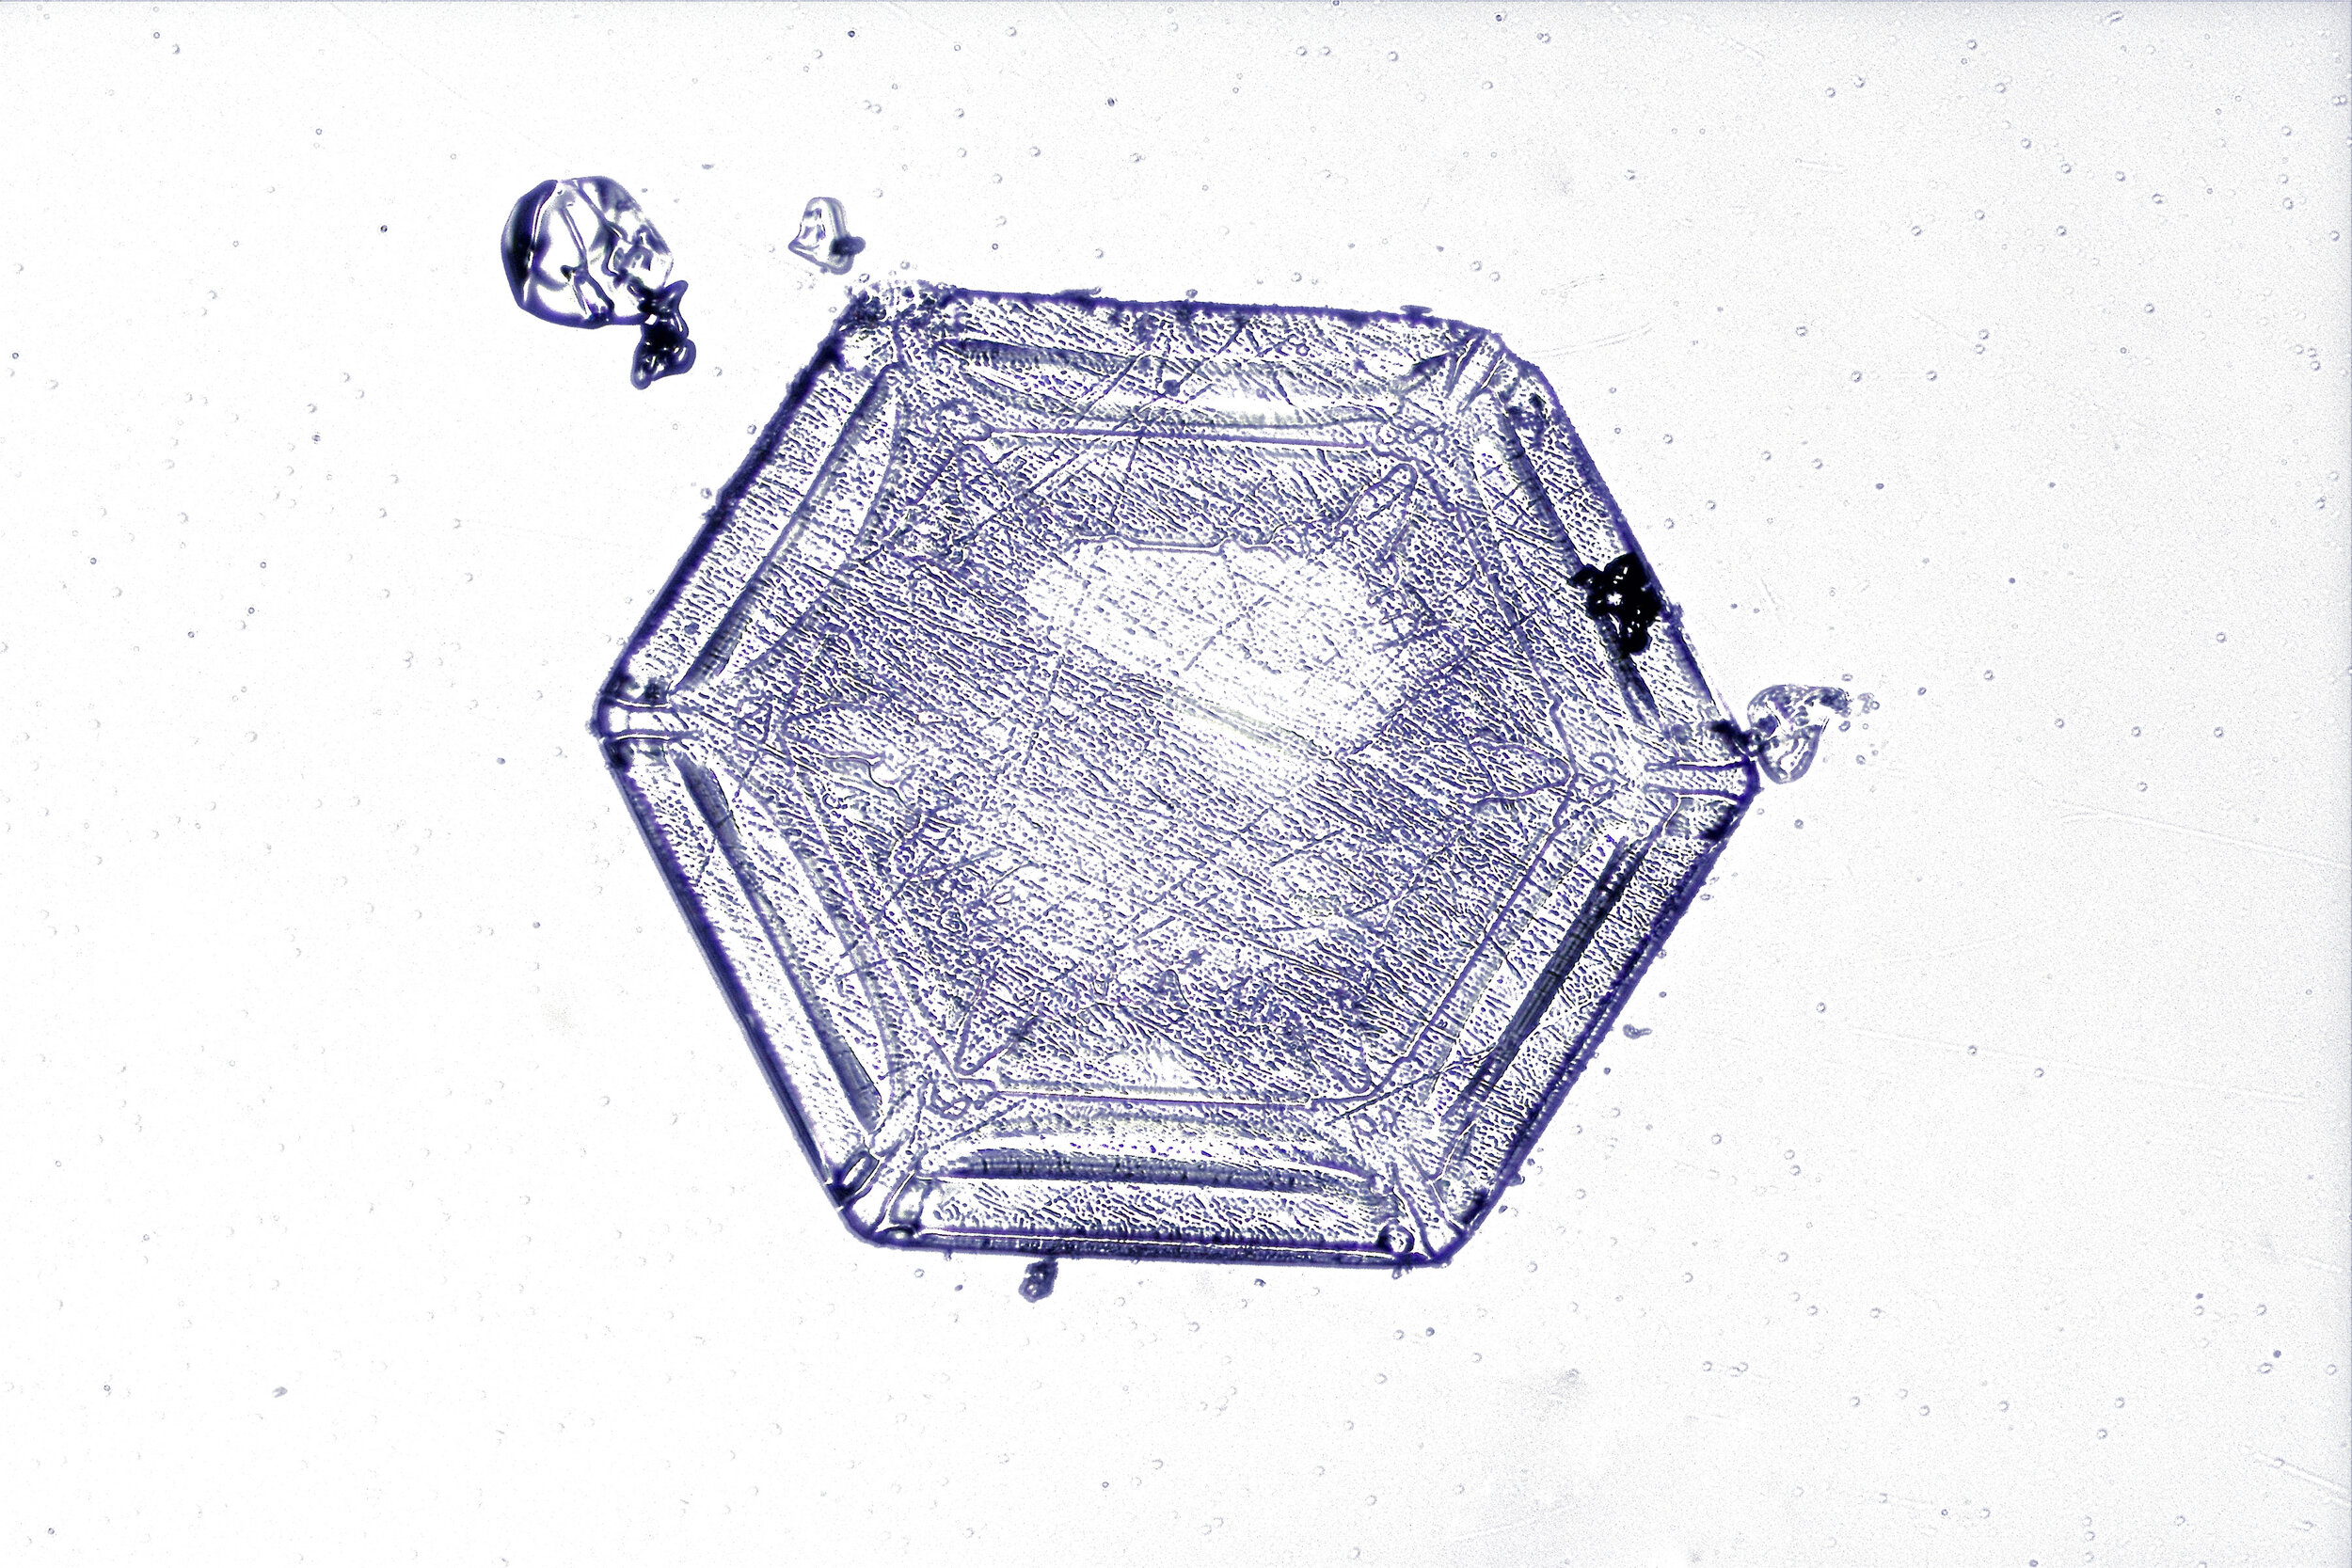 Gary-Mawe-Hexagonal-Plate-Snowflake-11.jpg